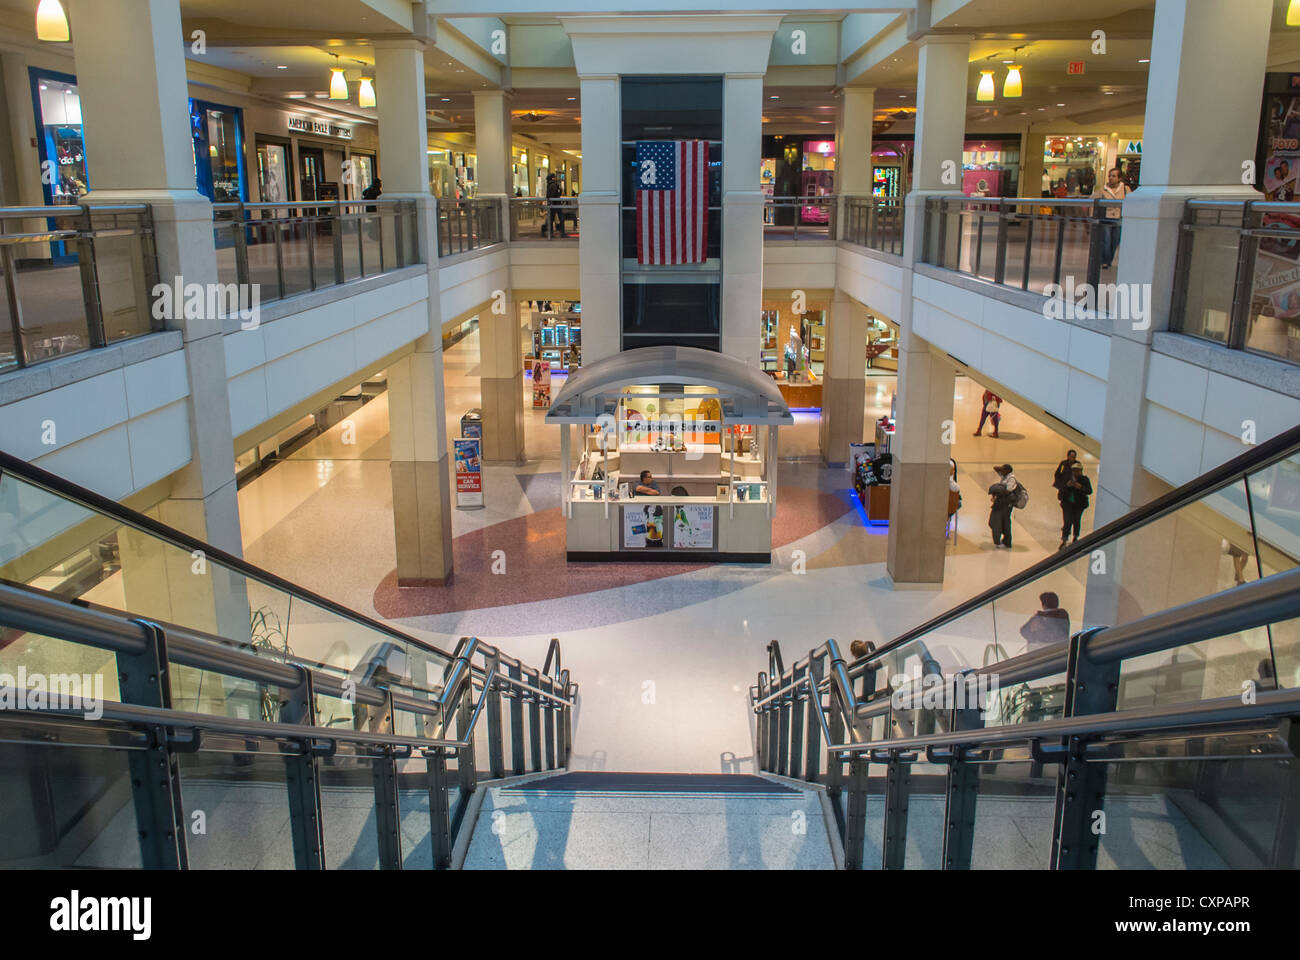 New York City, NY, USA, inside 'King's Plaza' Shopping Mall, Hallway, modern retail interior, modern building Stock Photo